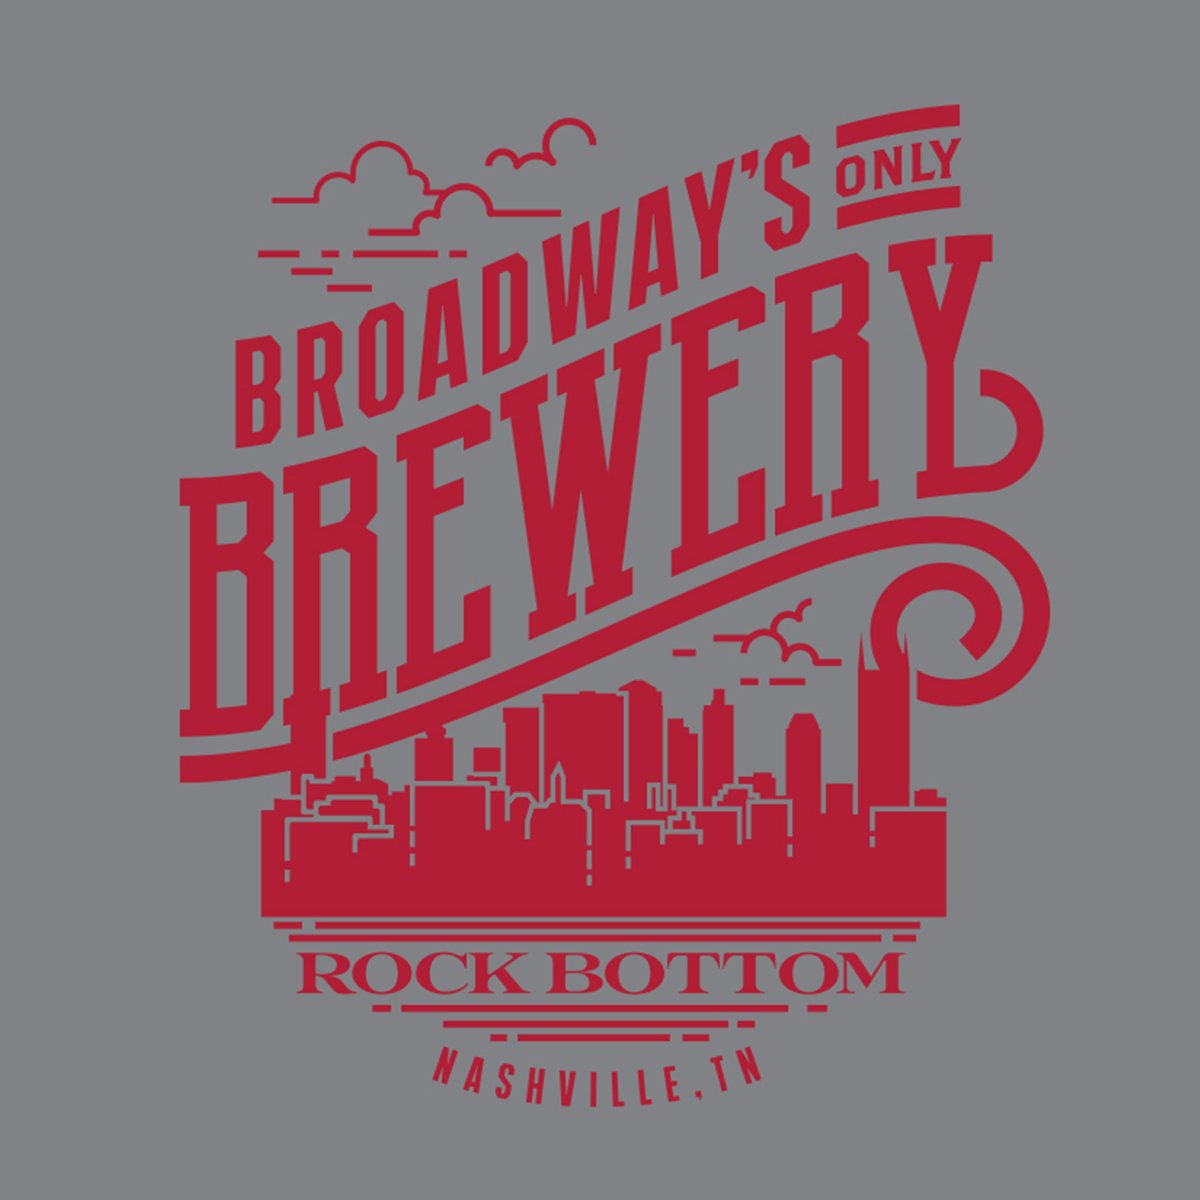 RB_Broadways_Brewery.jpg